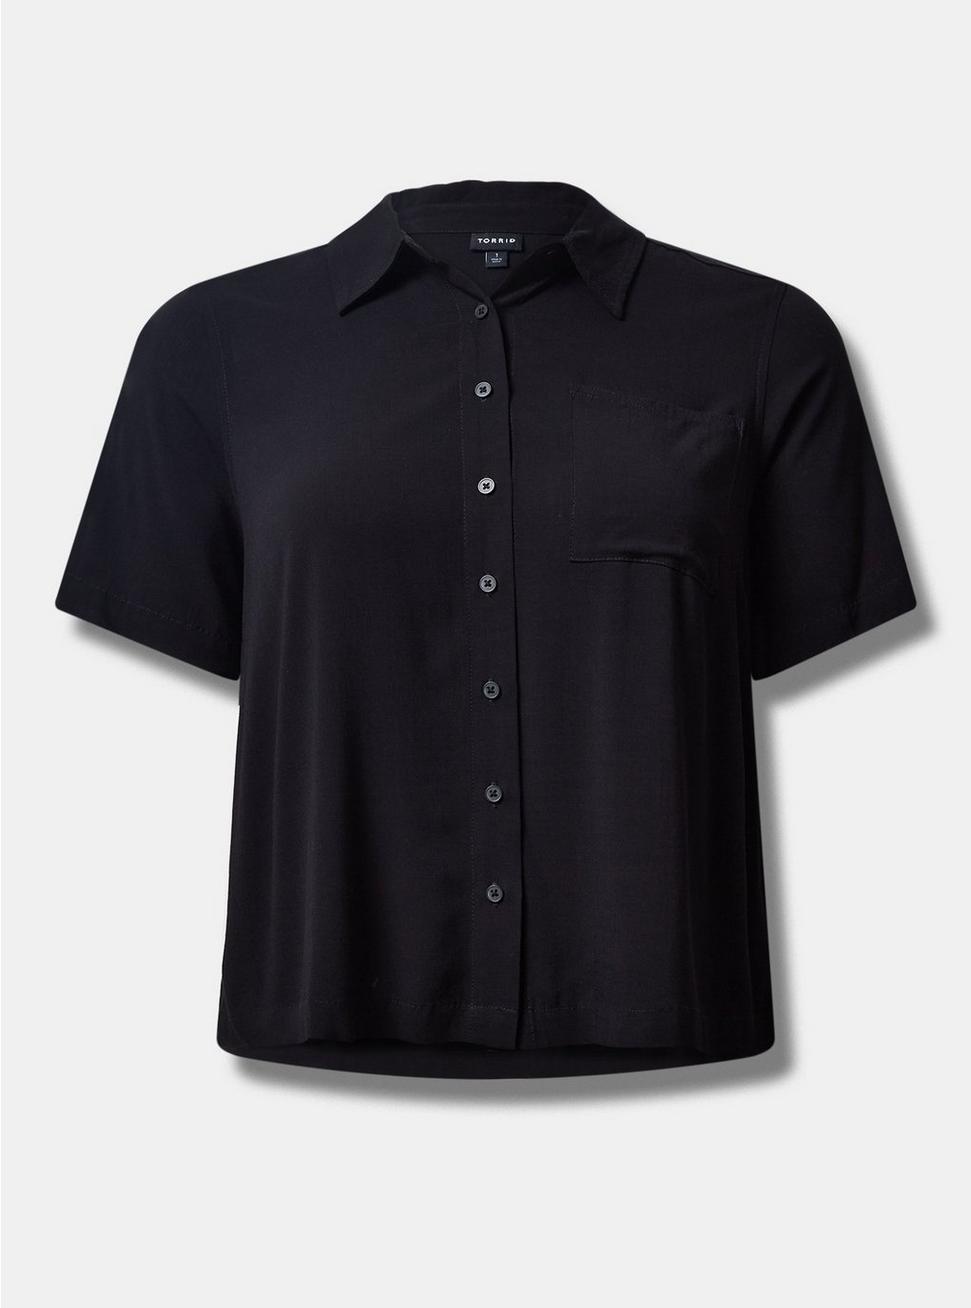 Plus Size Lizzie Rayon Slub Button Up Short Sleeve Crop Shirt, DEEP BLACK, hi-res